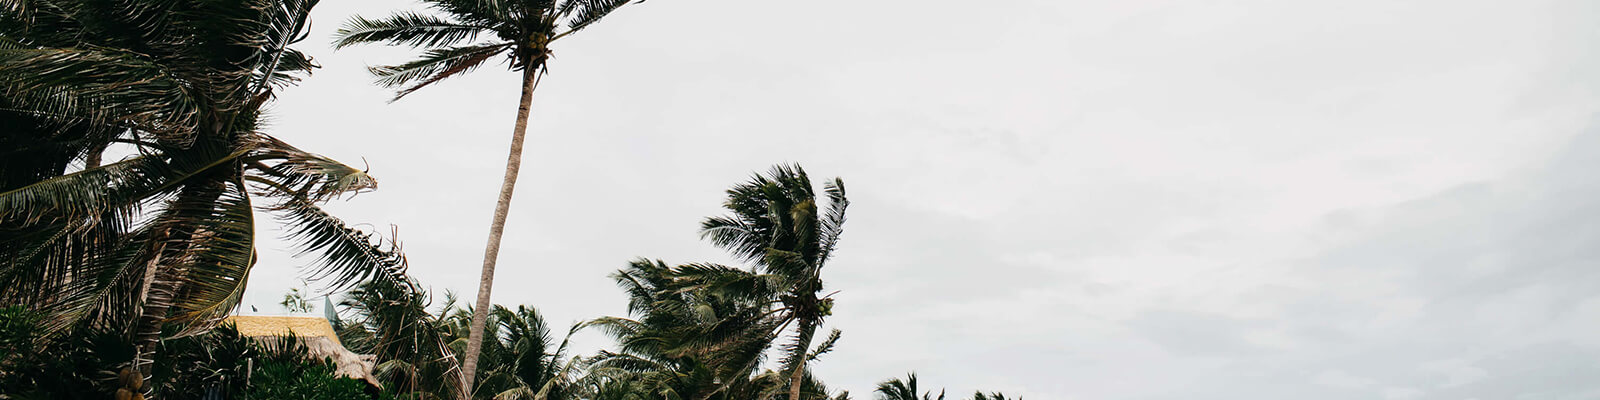 Sturm am Strand mit Palmen